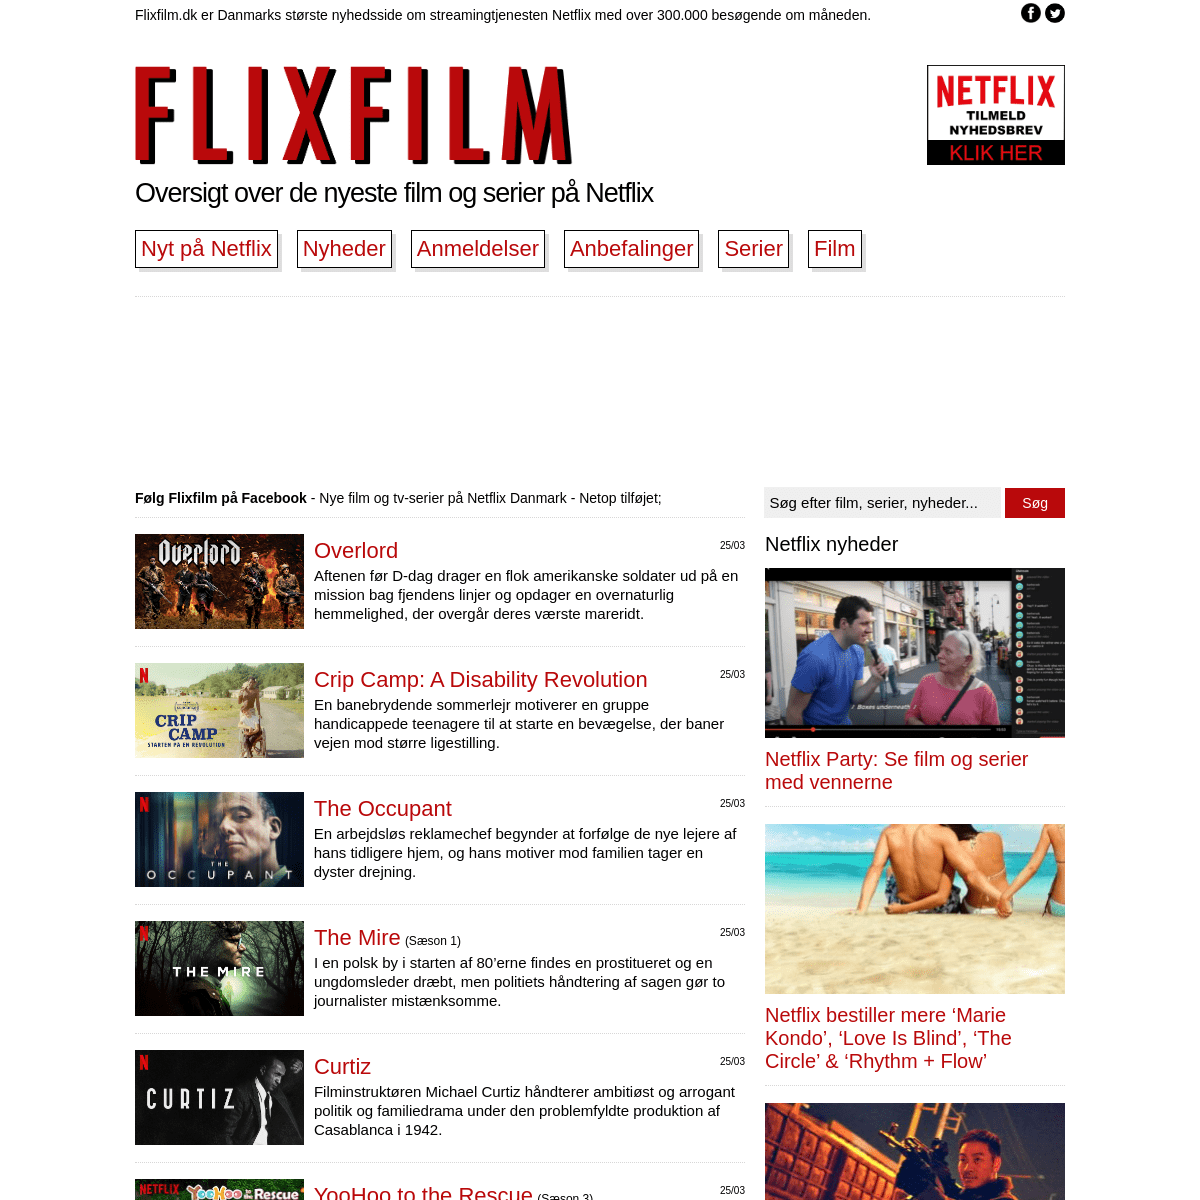 A complete backup of flixfilm.dk